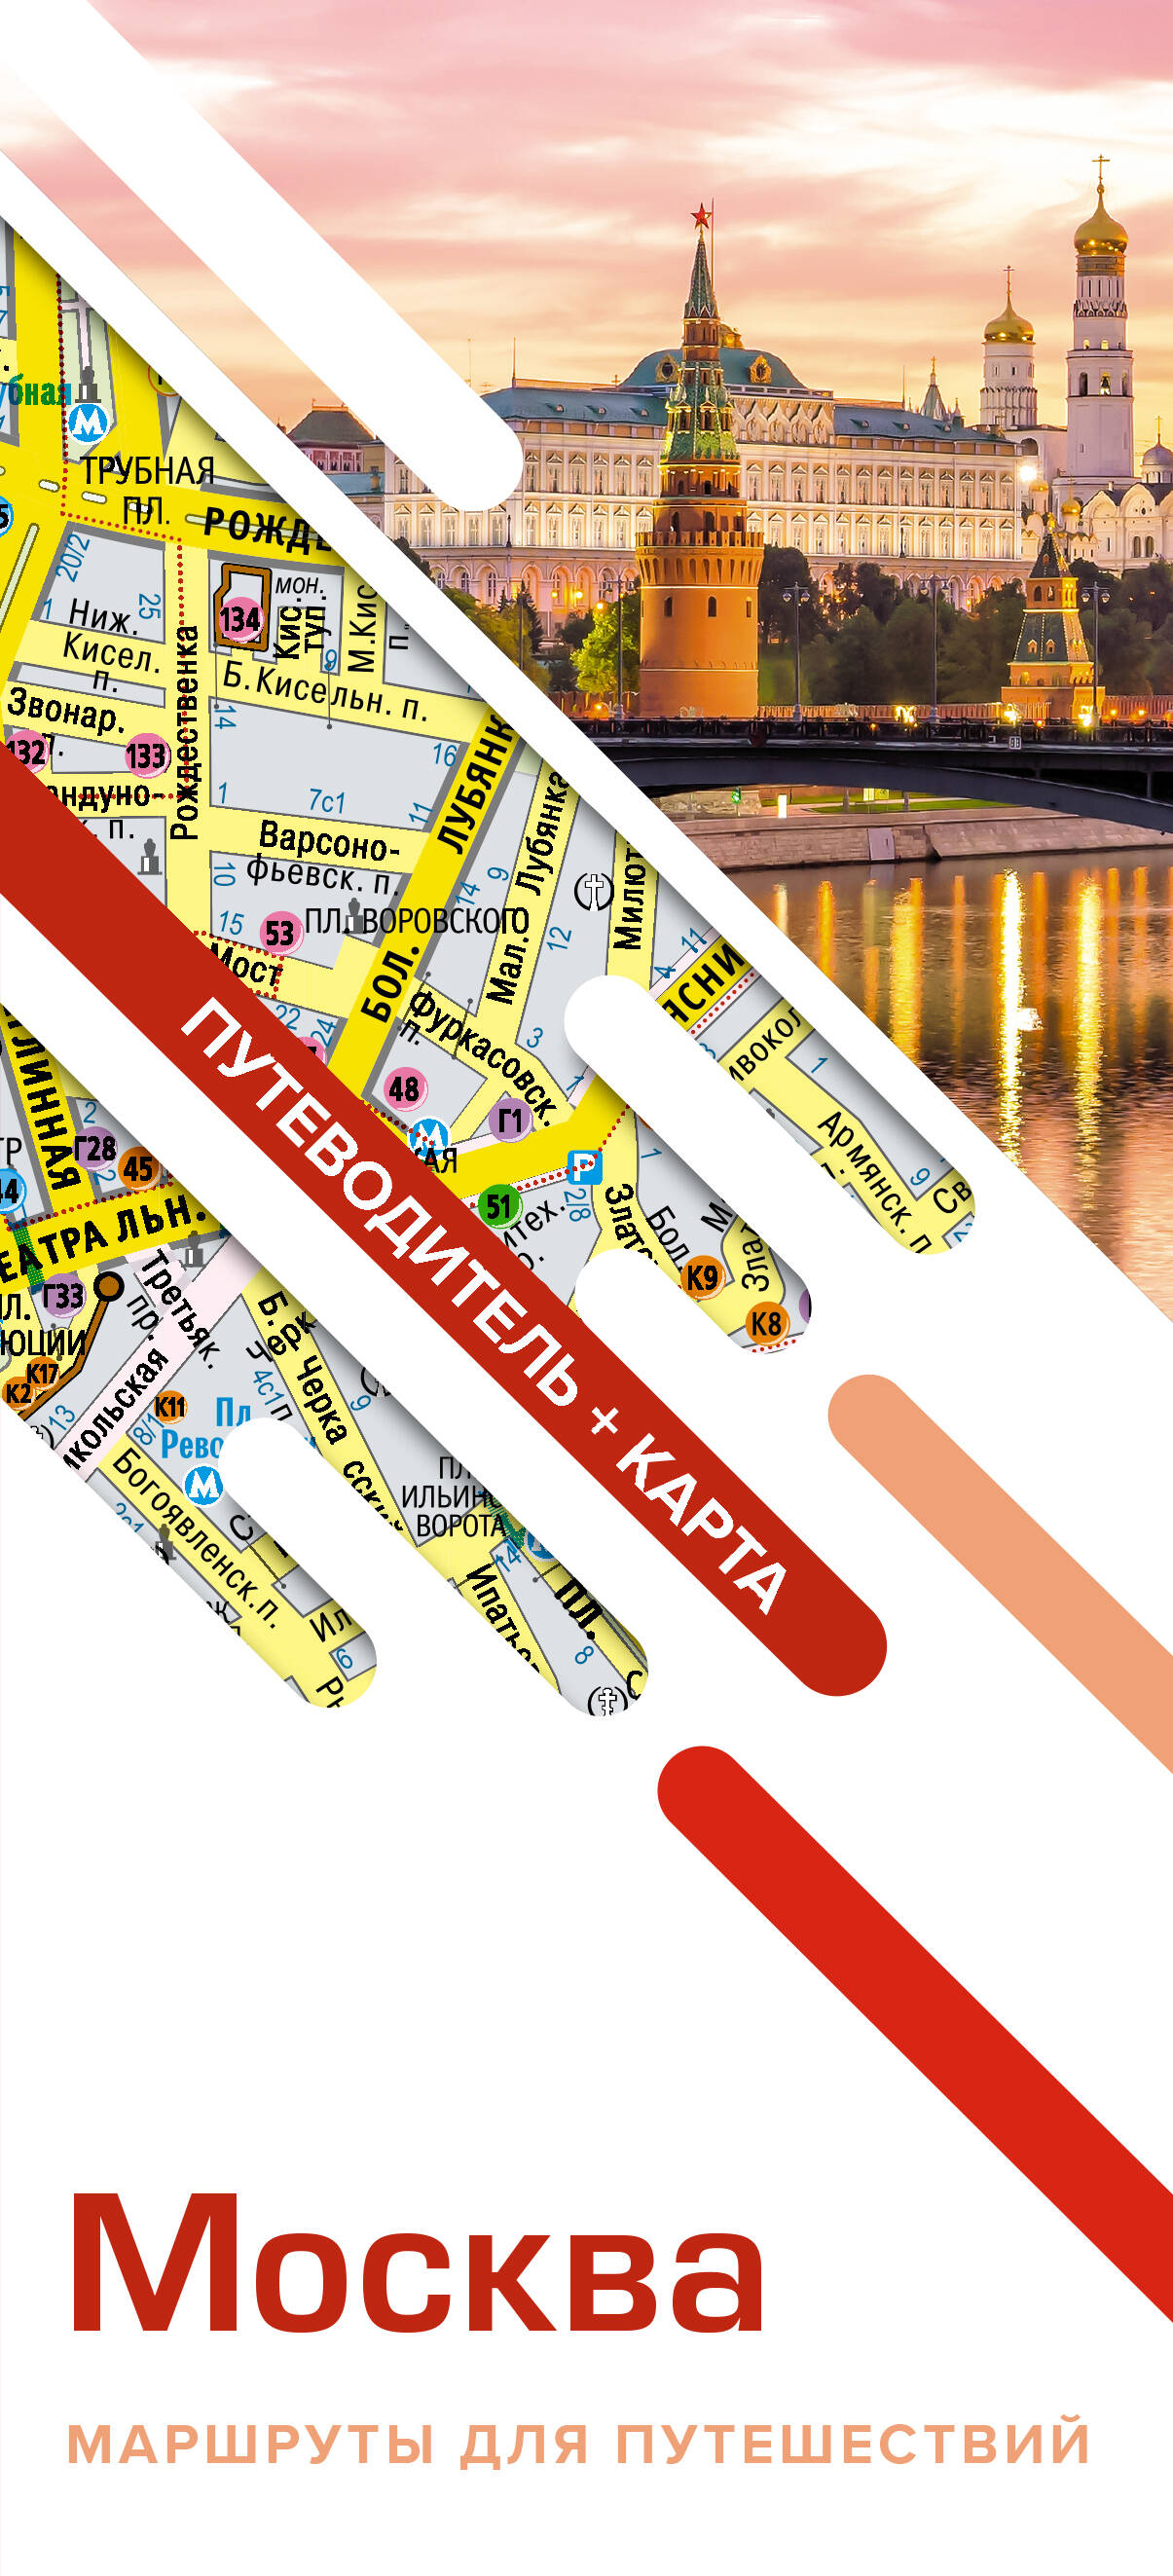 Москва. Маршруты для путешествий (путеводитель + карта)